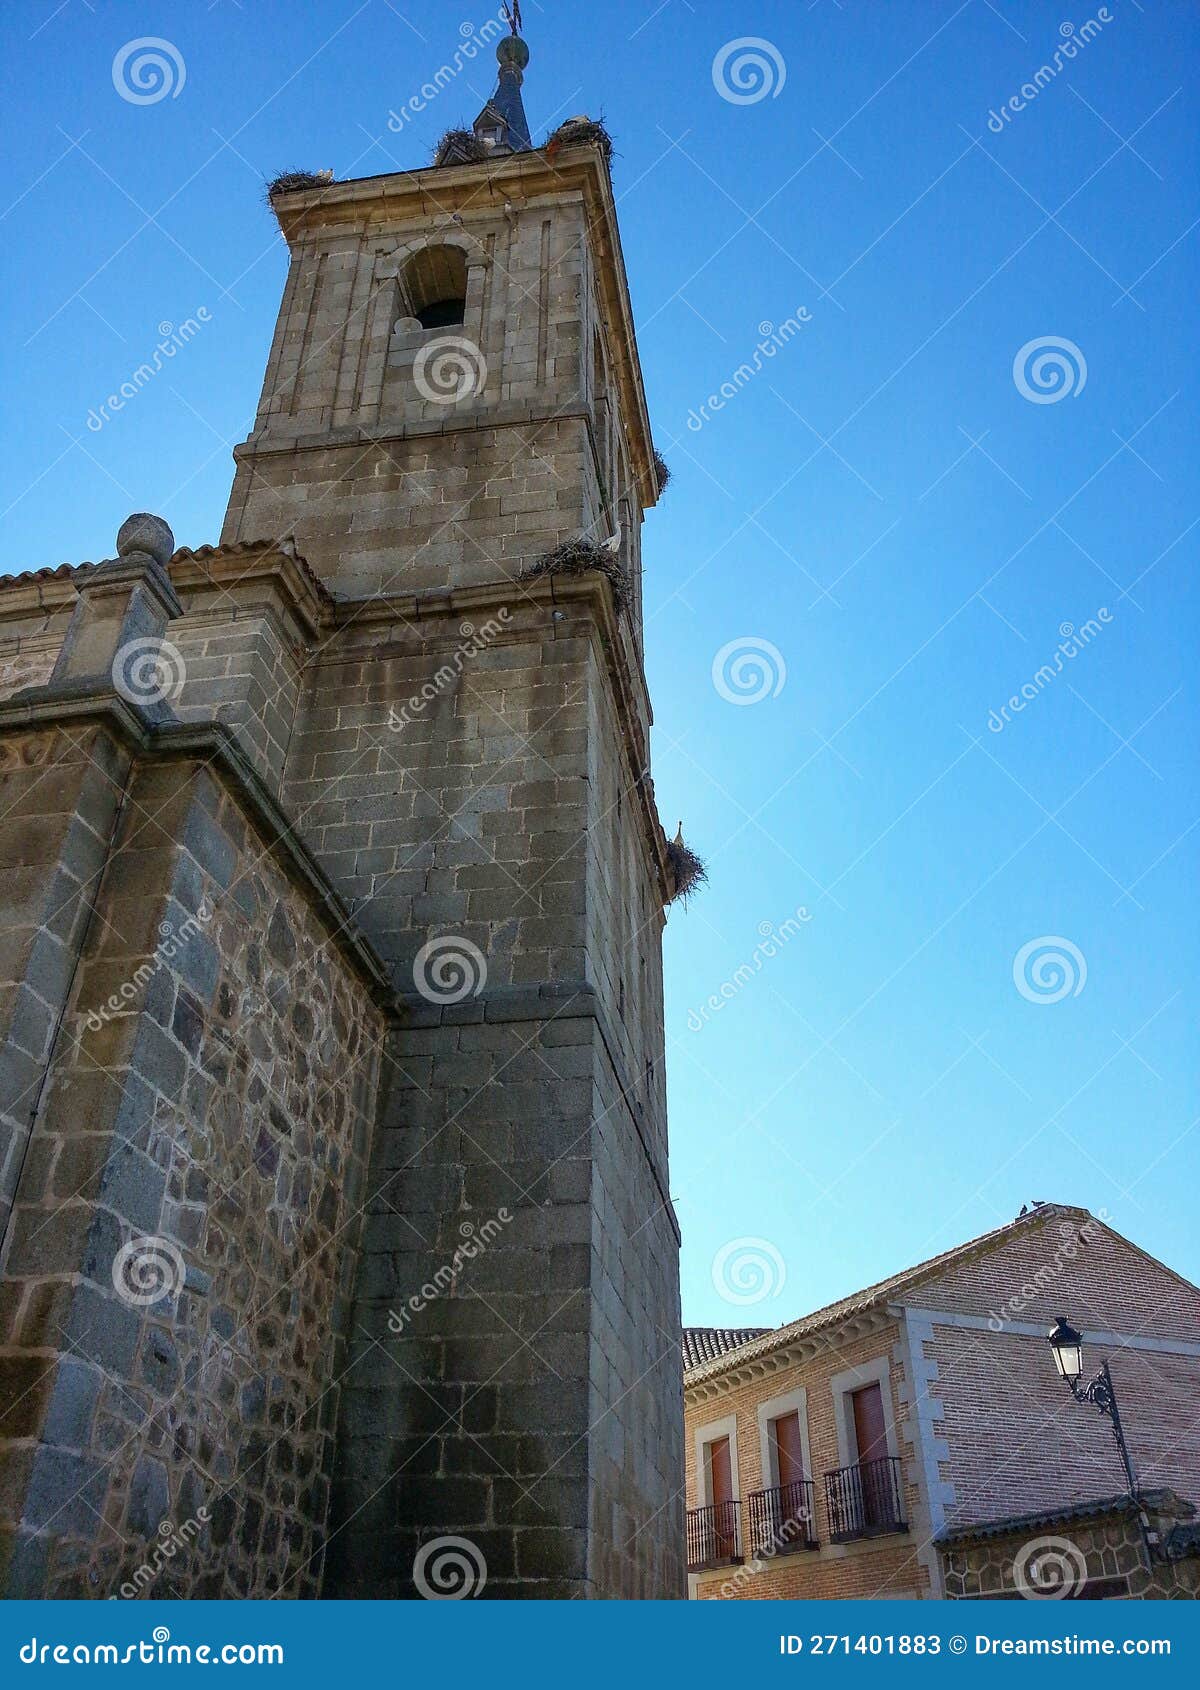 bell tower of the colegio de gramÃÂ¡ticos s.xvii in the municipality of cueva de toledo